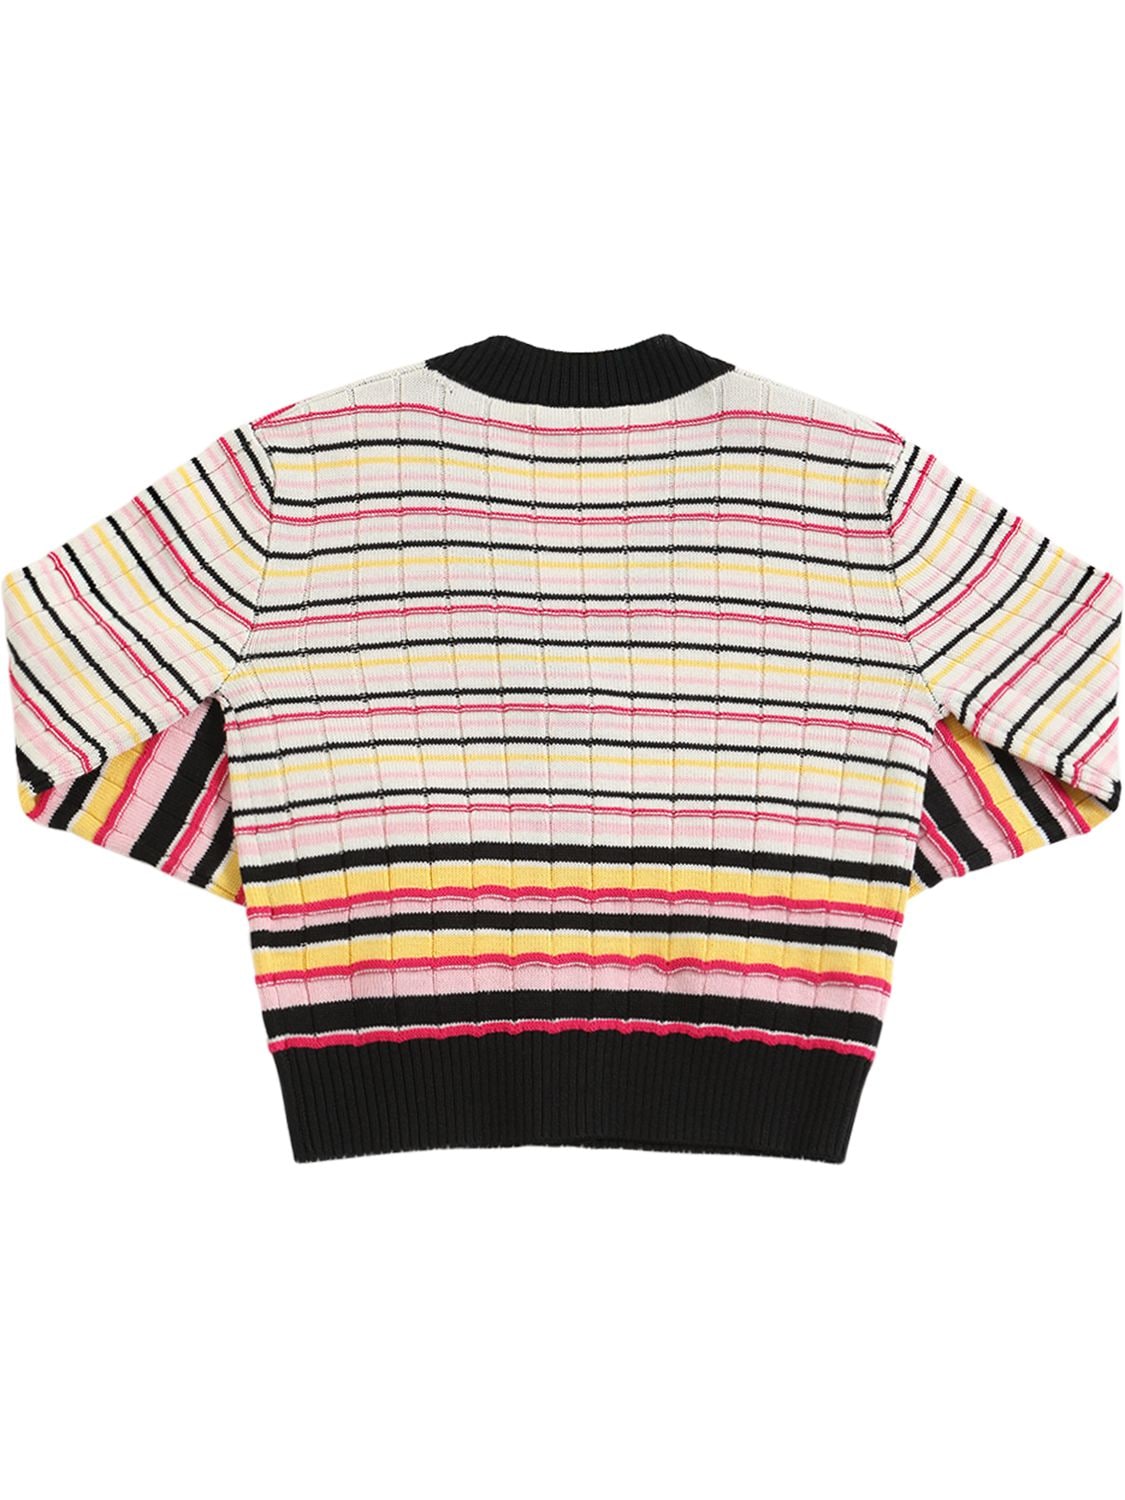 Shop N°21 Striped Wool Blend Knit Cardigan W/logo In Multicolor